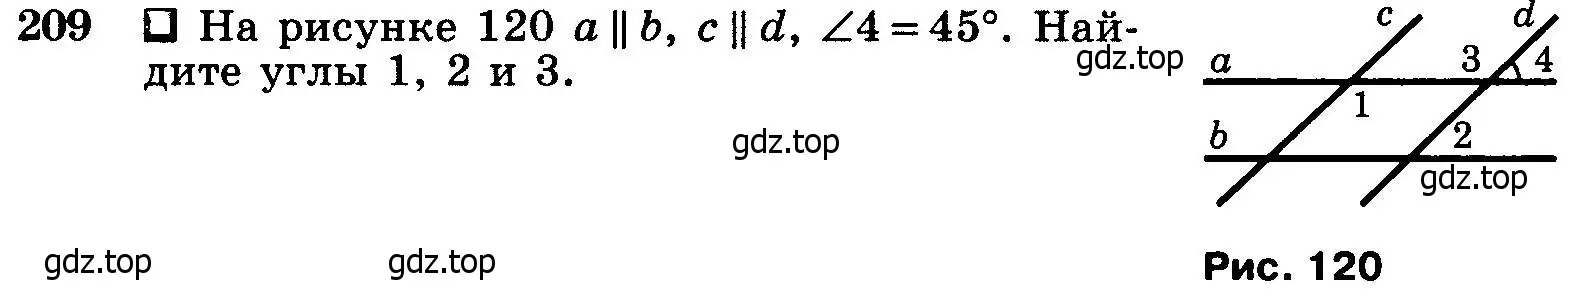 Условие номер 209 (страница 66) гдз по геометрии 7-9 класс Атанасян, Бутузов, учебник